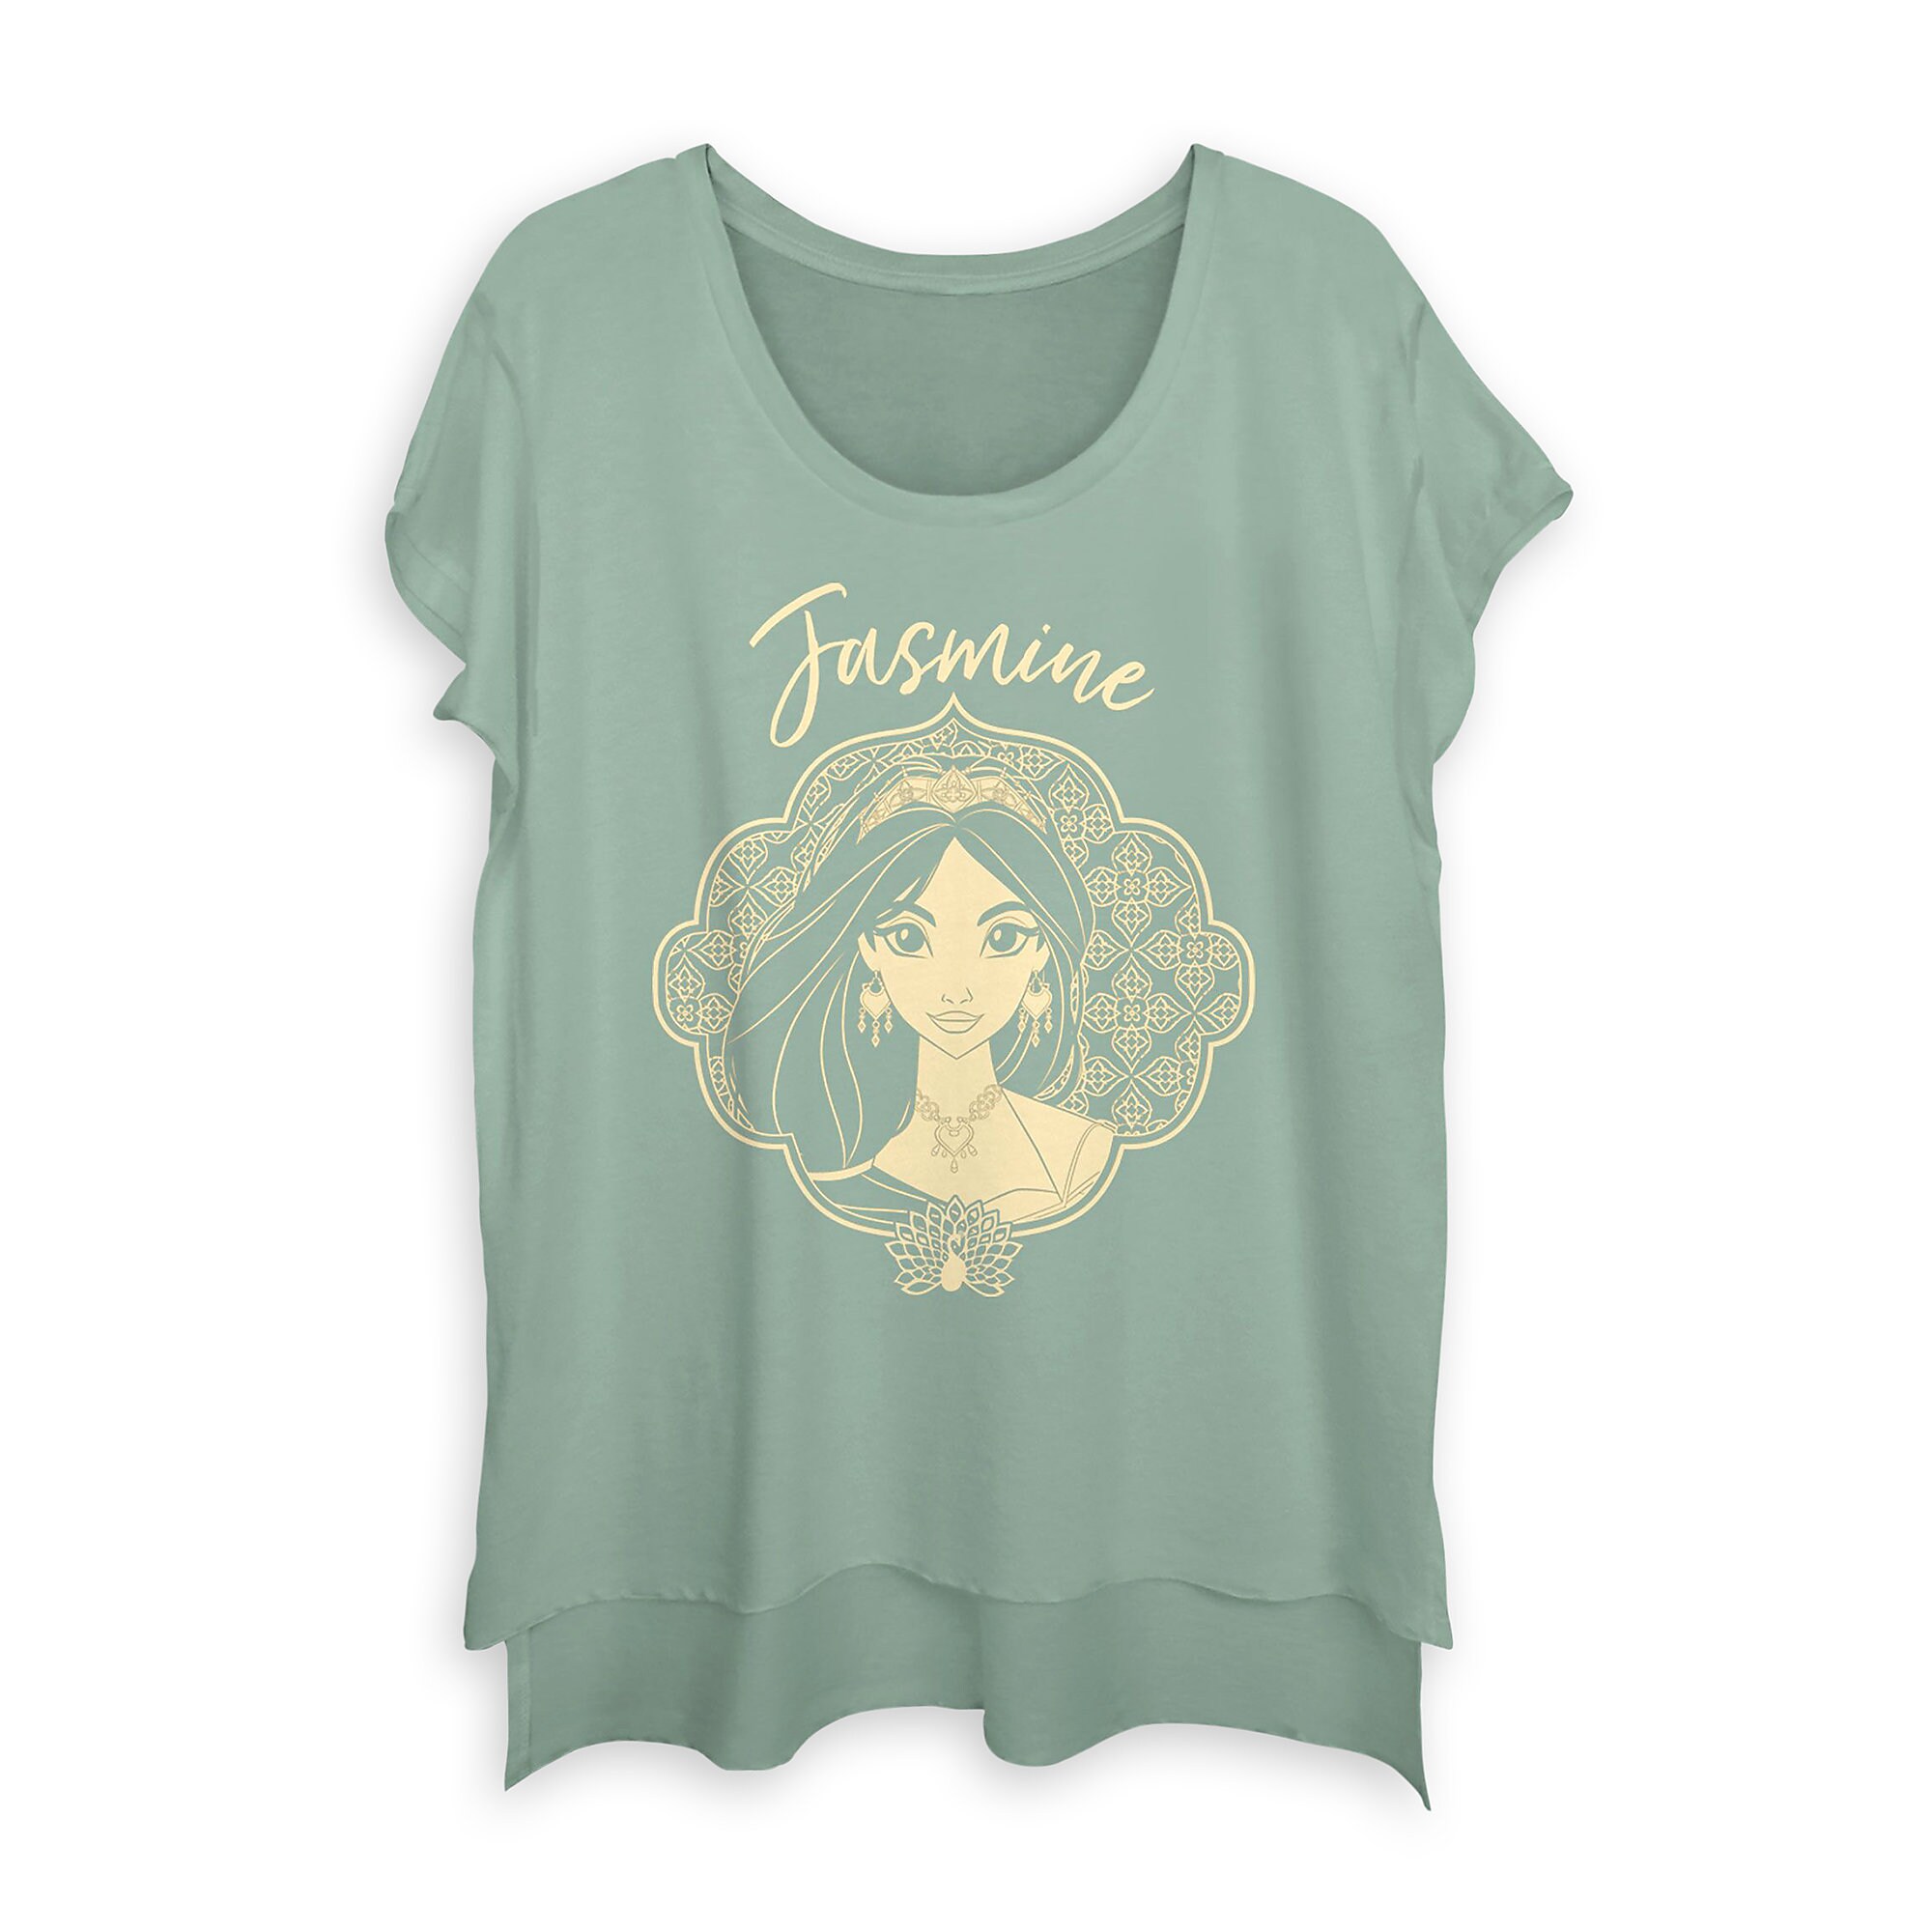 Jasmine Fashion T-Shirt for Juniors - Aladdin - Live Action Film